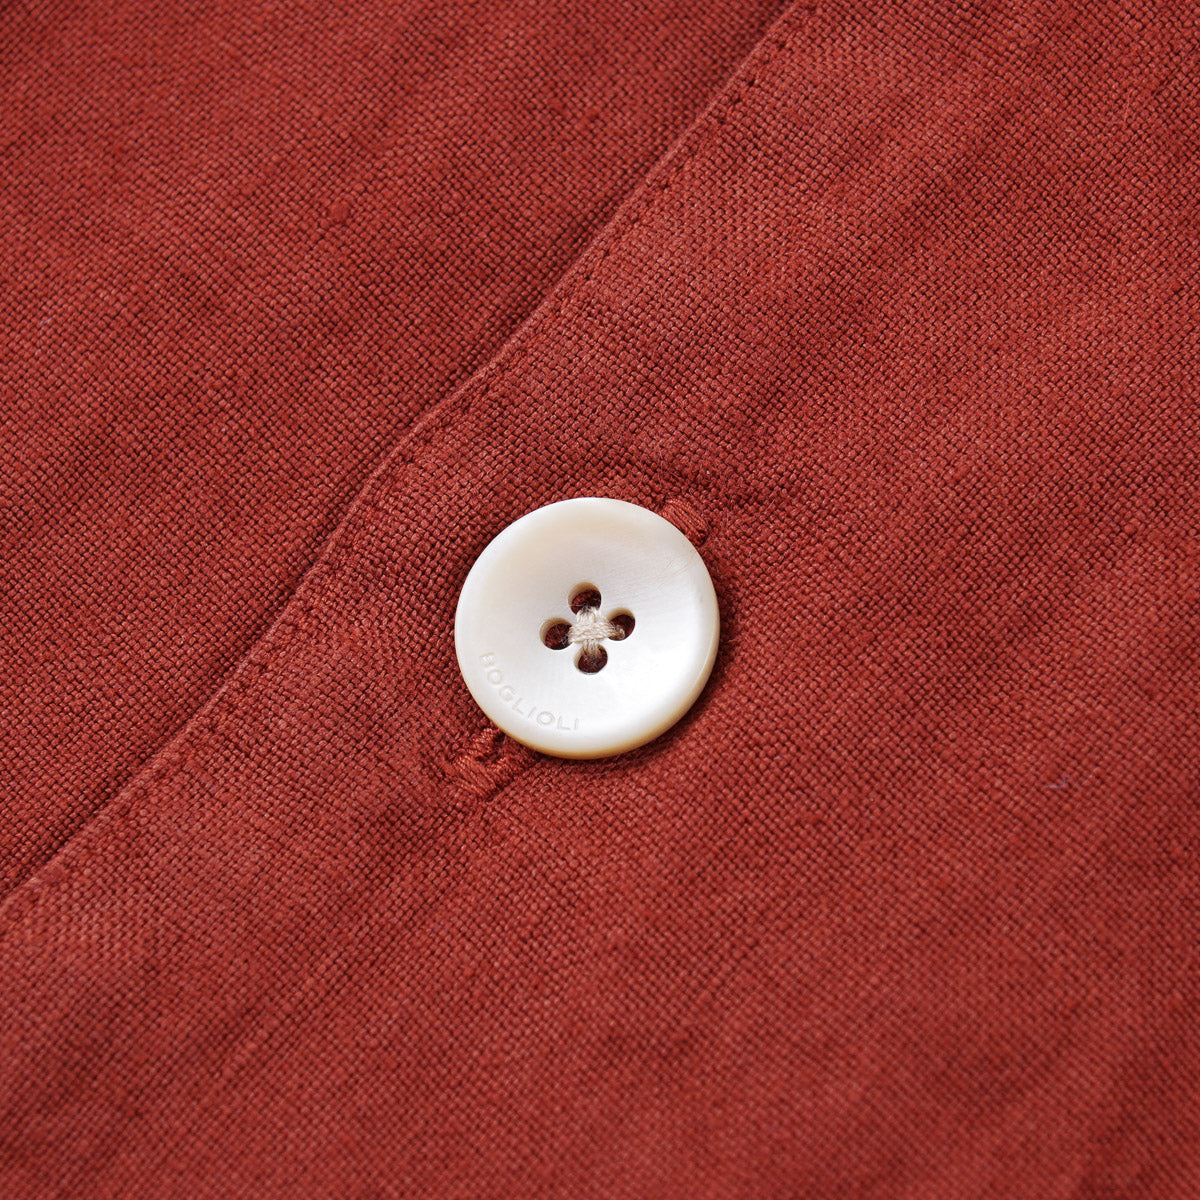 Boglioli Linen Sahariana Shirt-Jacket - Top Shelf Apparel